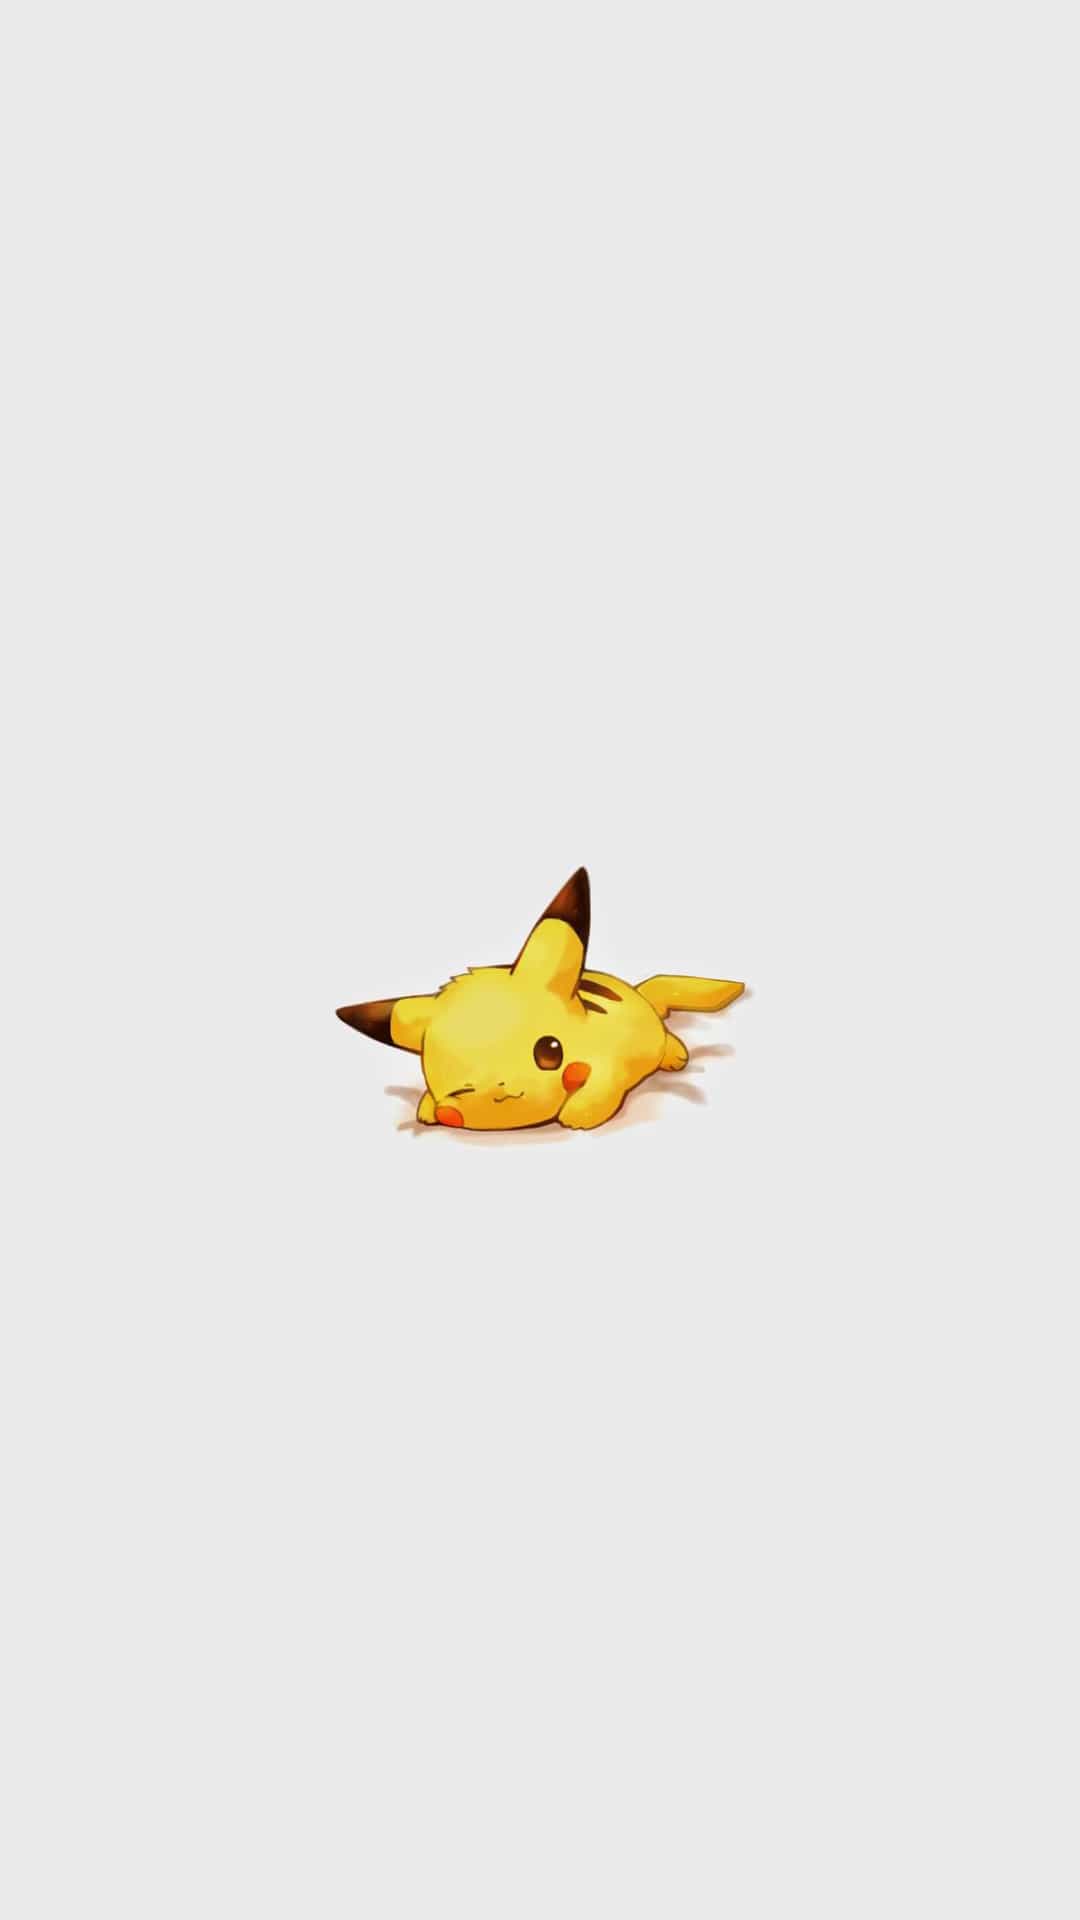 cute-pikachu-pokemon-go-illustration-android-wallpaper